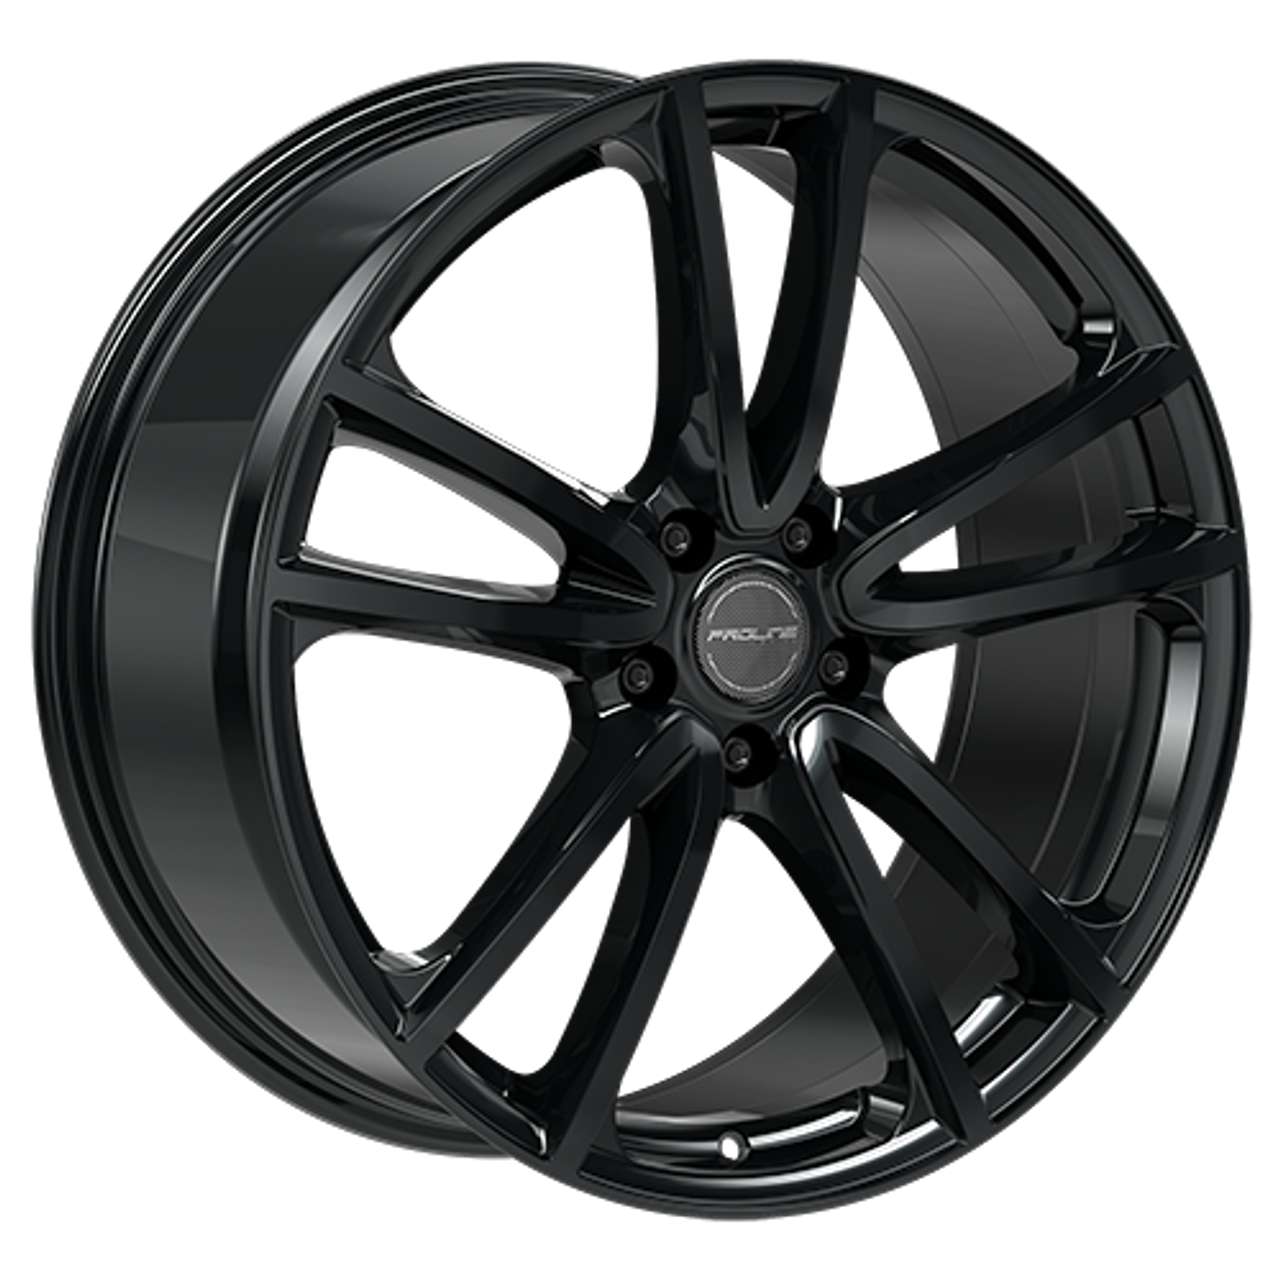 PROLINE CX300 black glossy 8.5Jx20 5x114.3 ET45